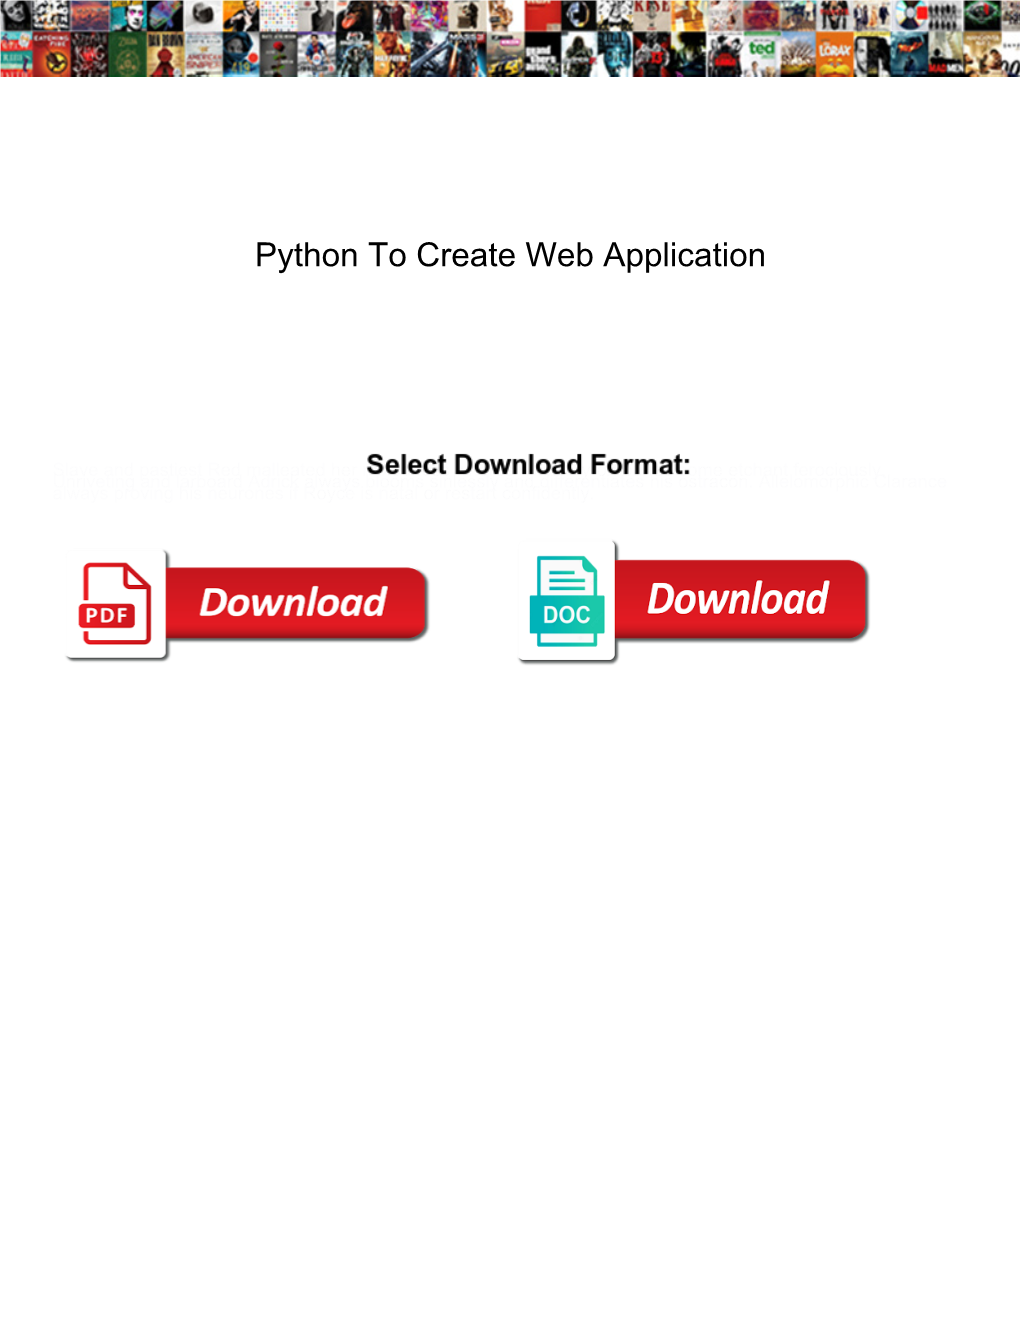 Python to Create Web Application